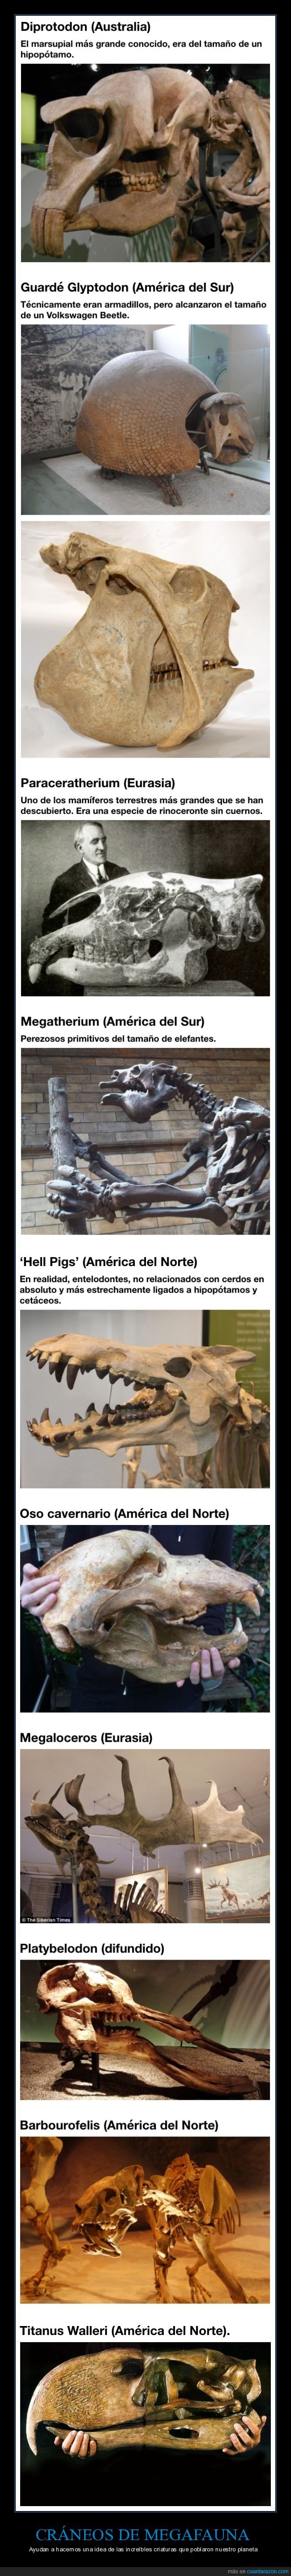 cráneos,megafauna,animales,curiosidades